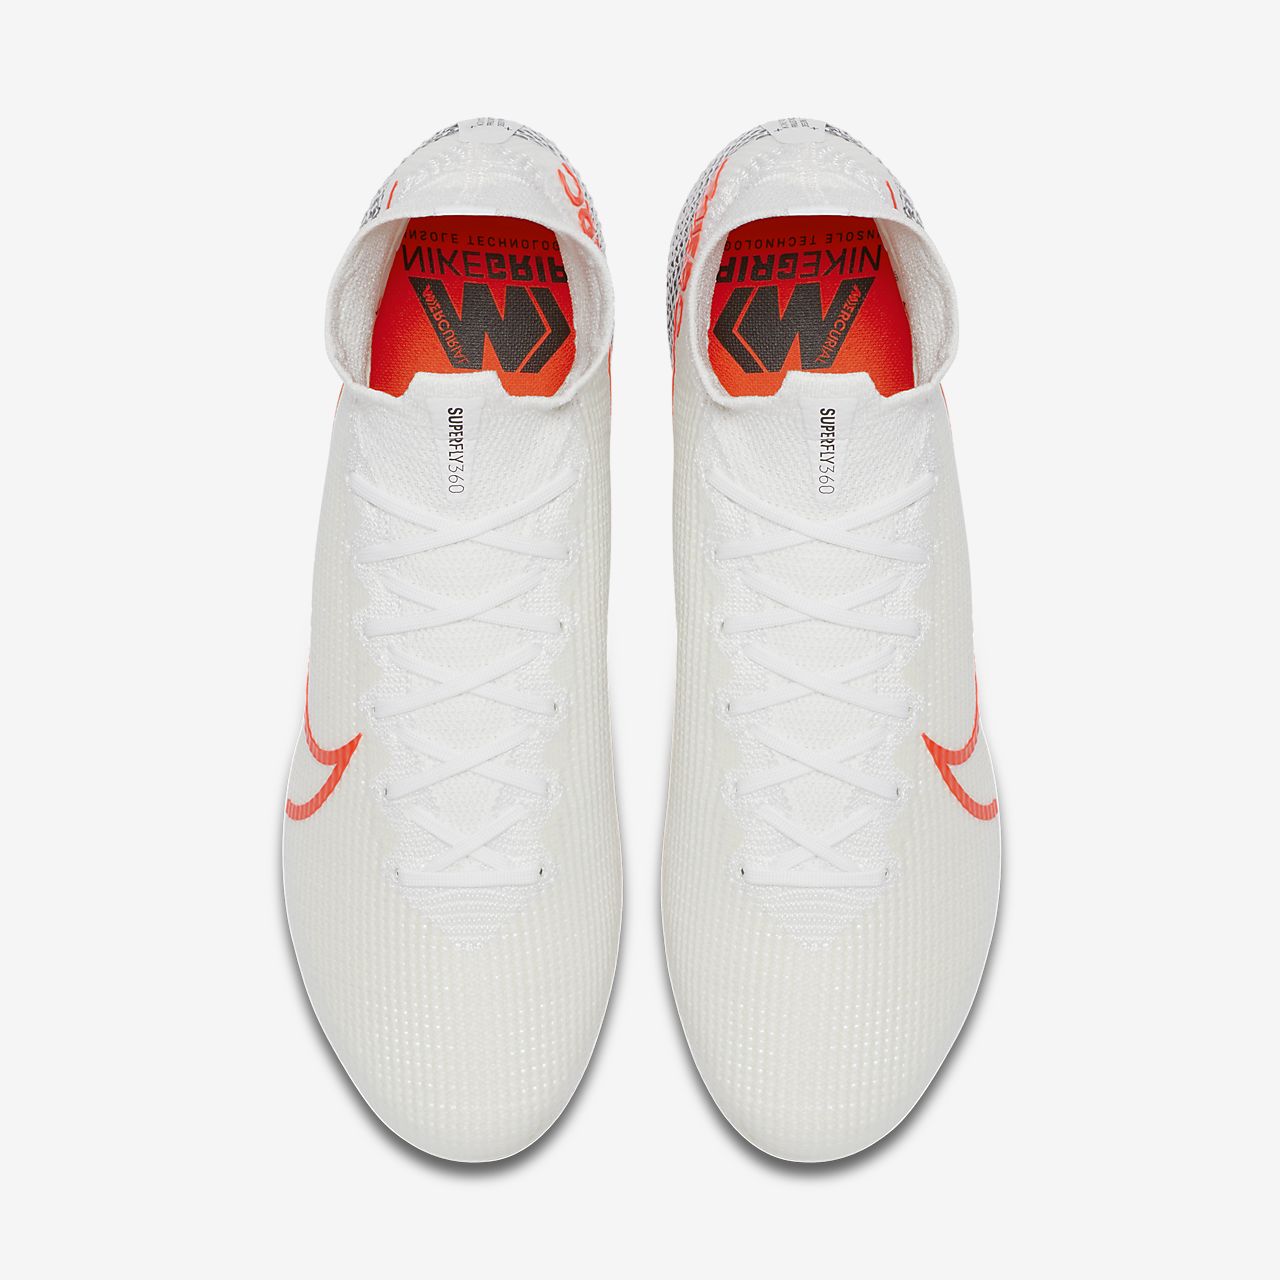 Football shoes Nike mercurial superfly micro pro cr7 fg f009.